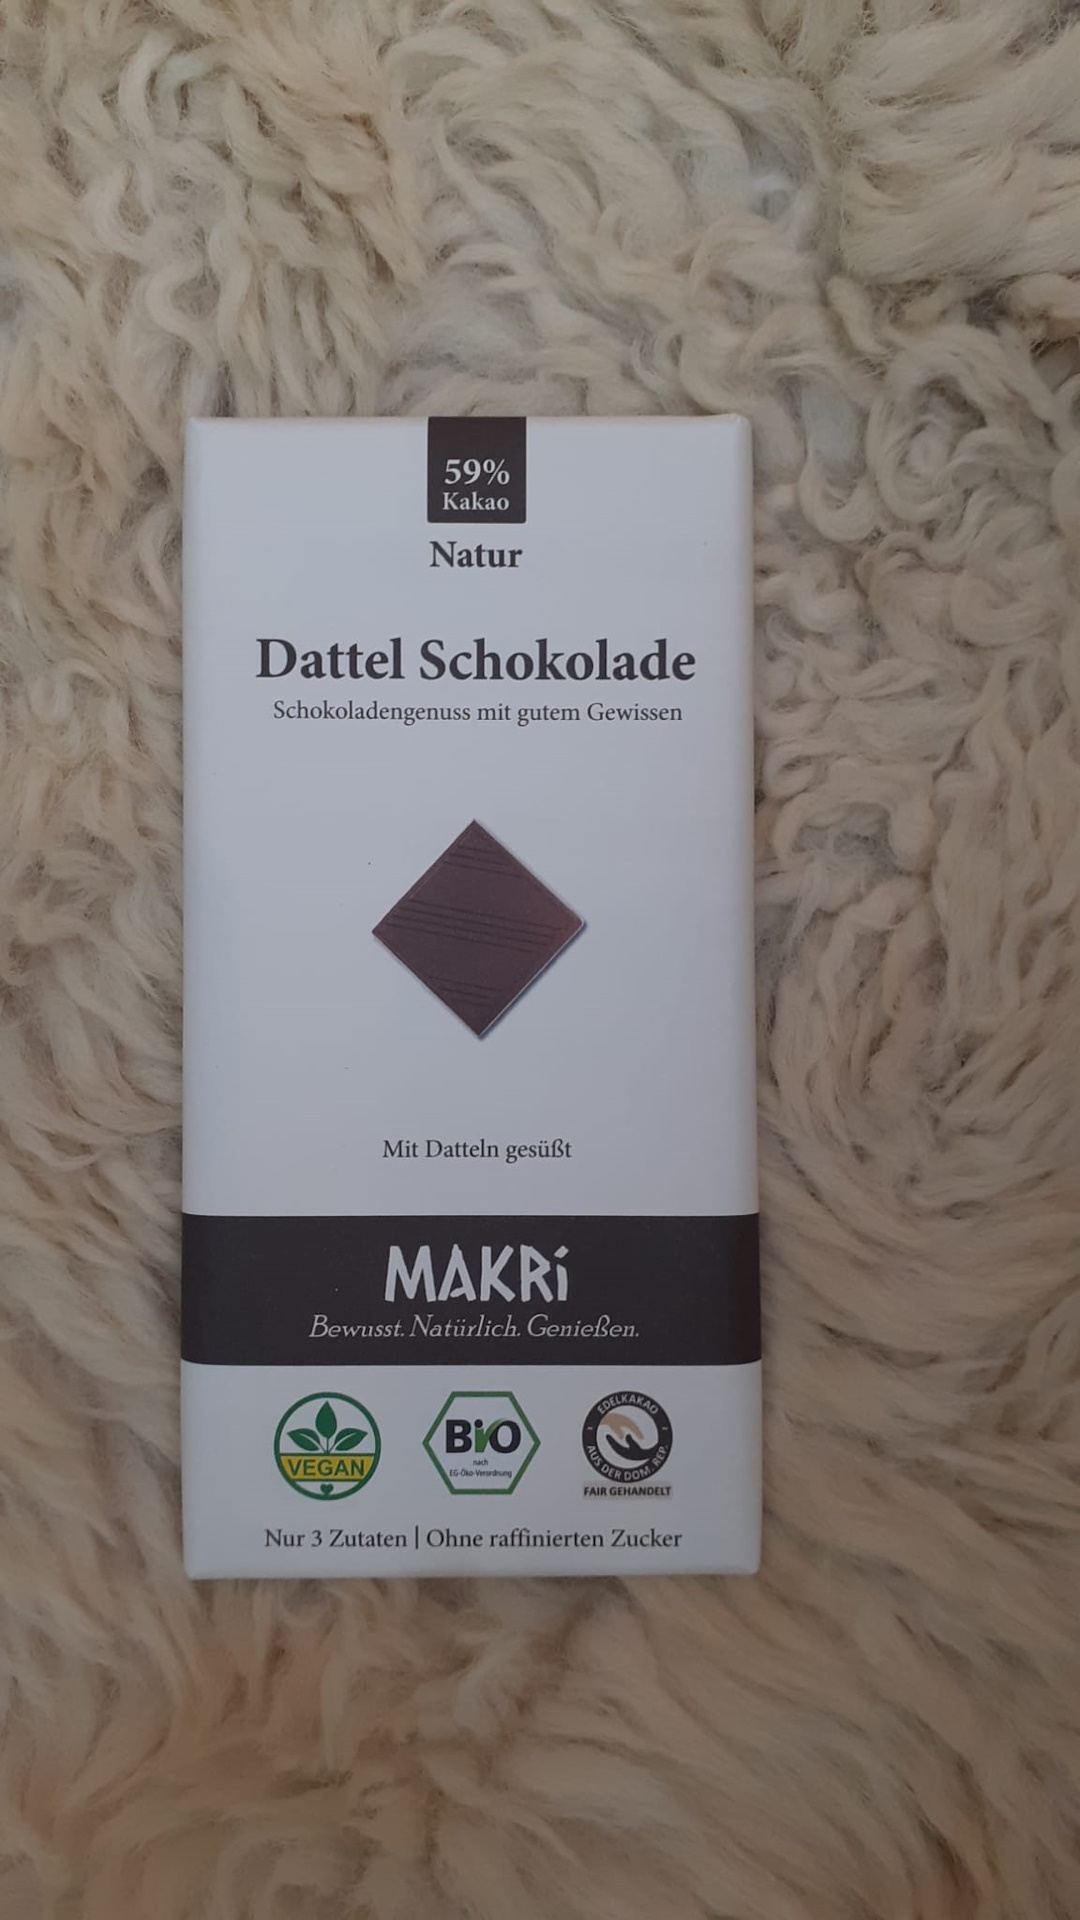 Dattel Schokolade-Naturhaus Nördlingen